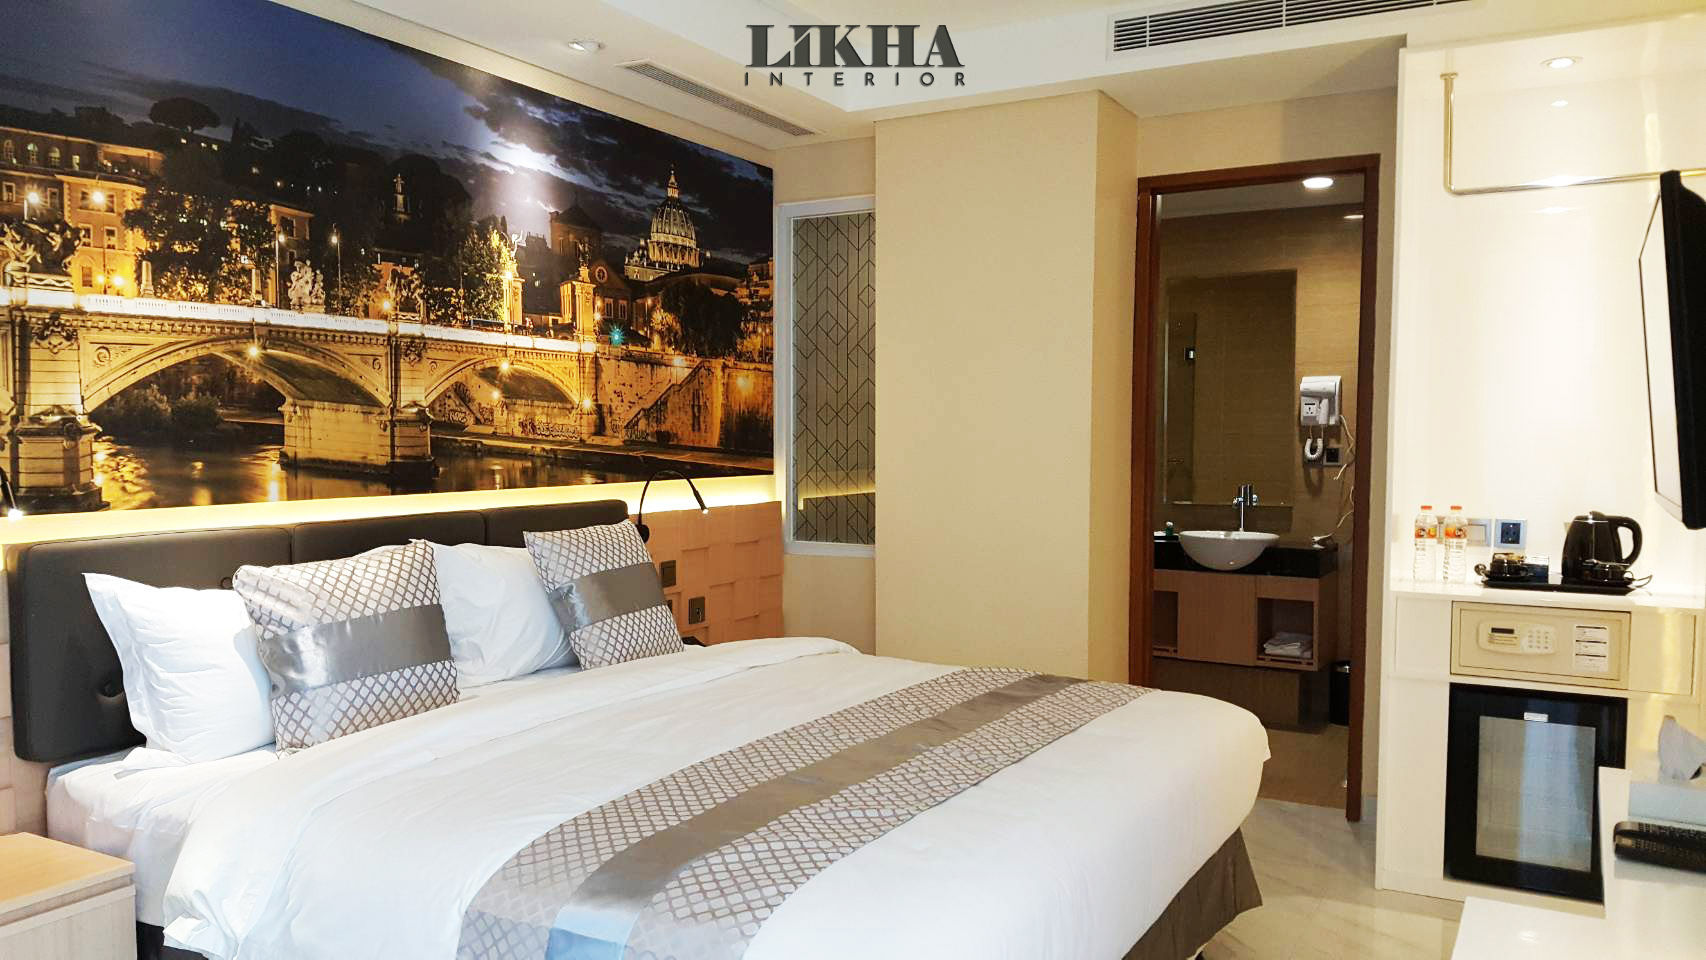 HOTEL ELEGAN DAN NYAMAN di Grand Viveana, Likha Interior Likha Interior Commercial spaces Plywood Hotels